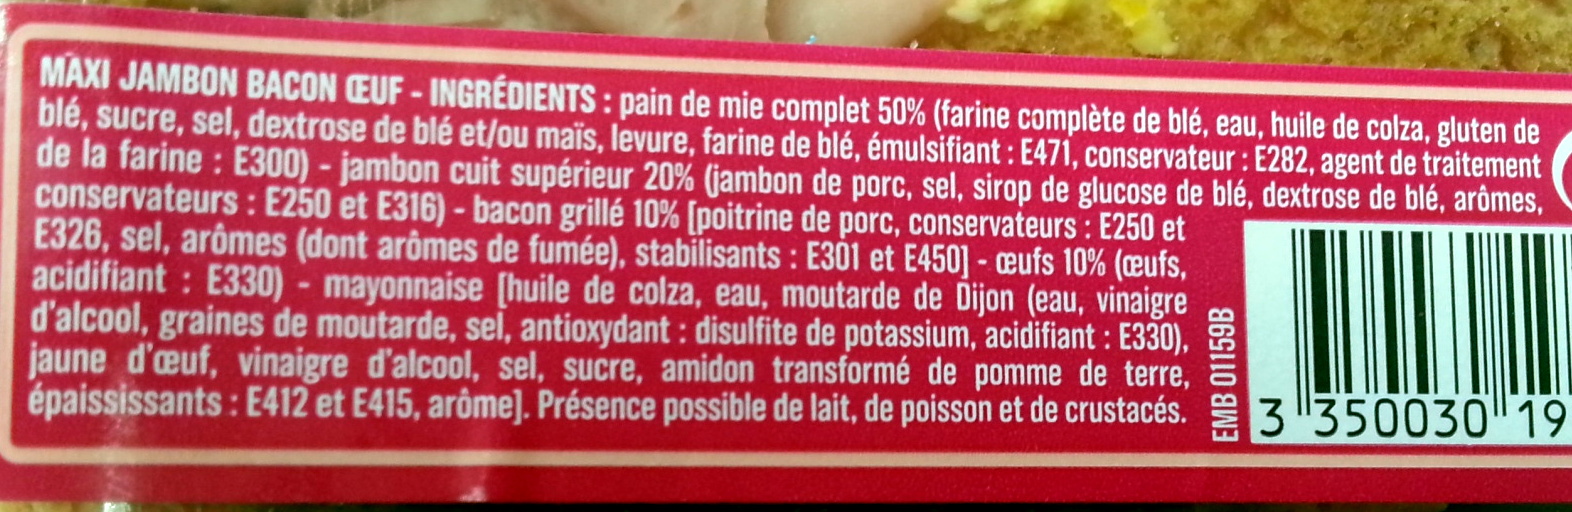 Maxi Jambon Bacon Oeuf - Ingredients - fr